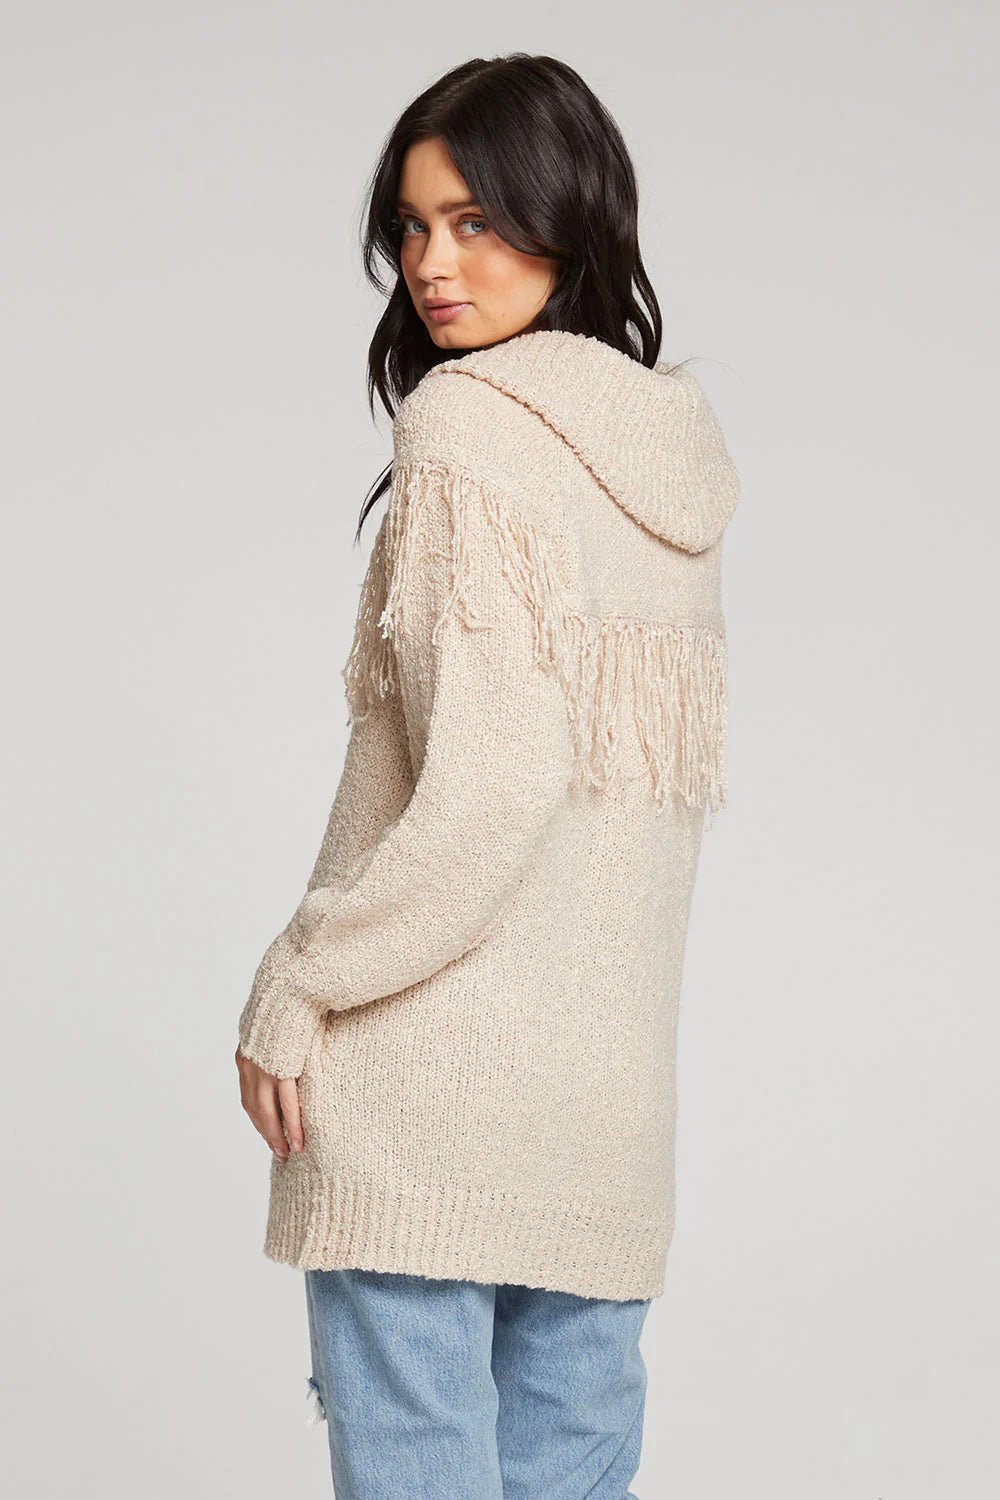 Saltwater Luxe Aura Sweater in Natural - Estilo Boutique